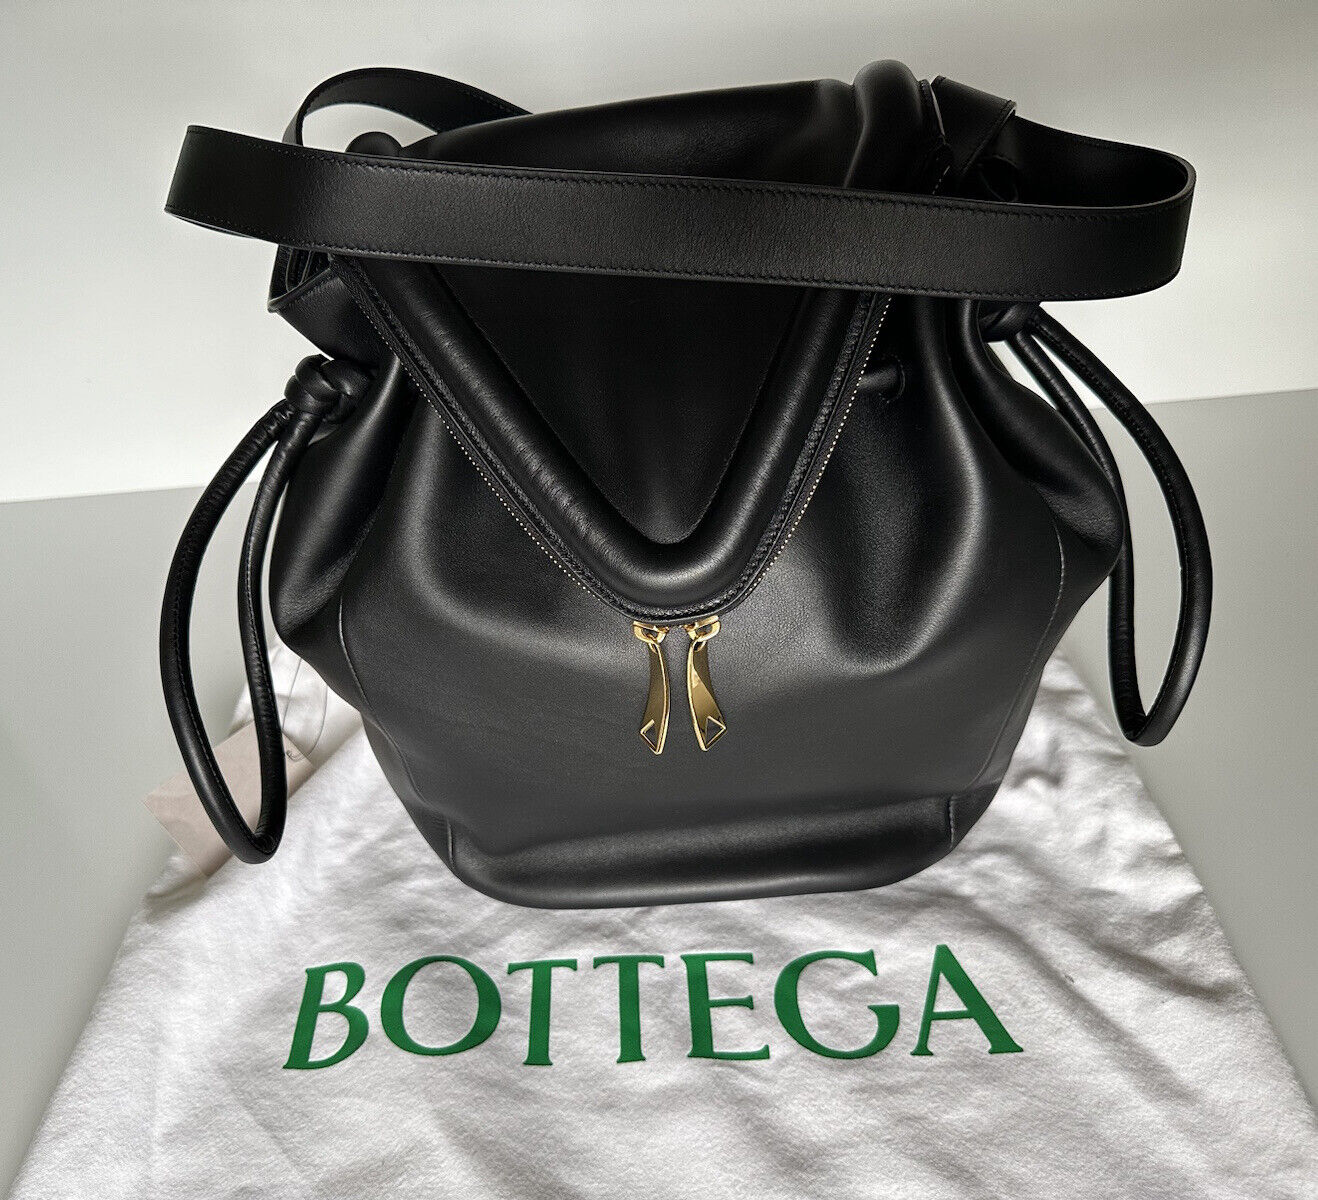 Neu mit Etikett: 3500 $ Bottega Veneta Napa Große schwarze Carbas-Umhängetasche aus Leder Italien 